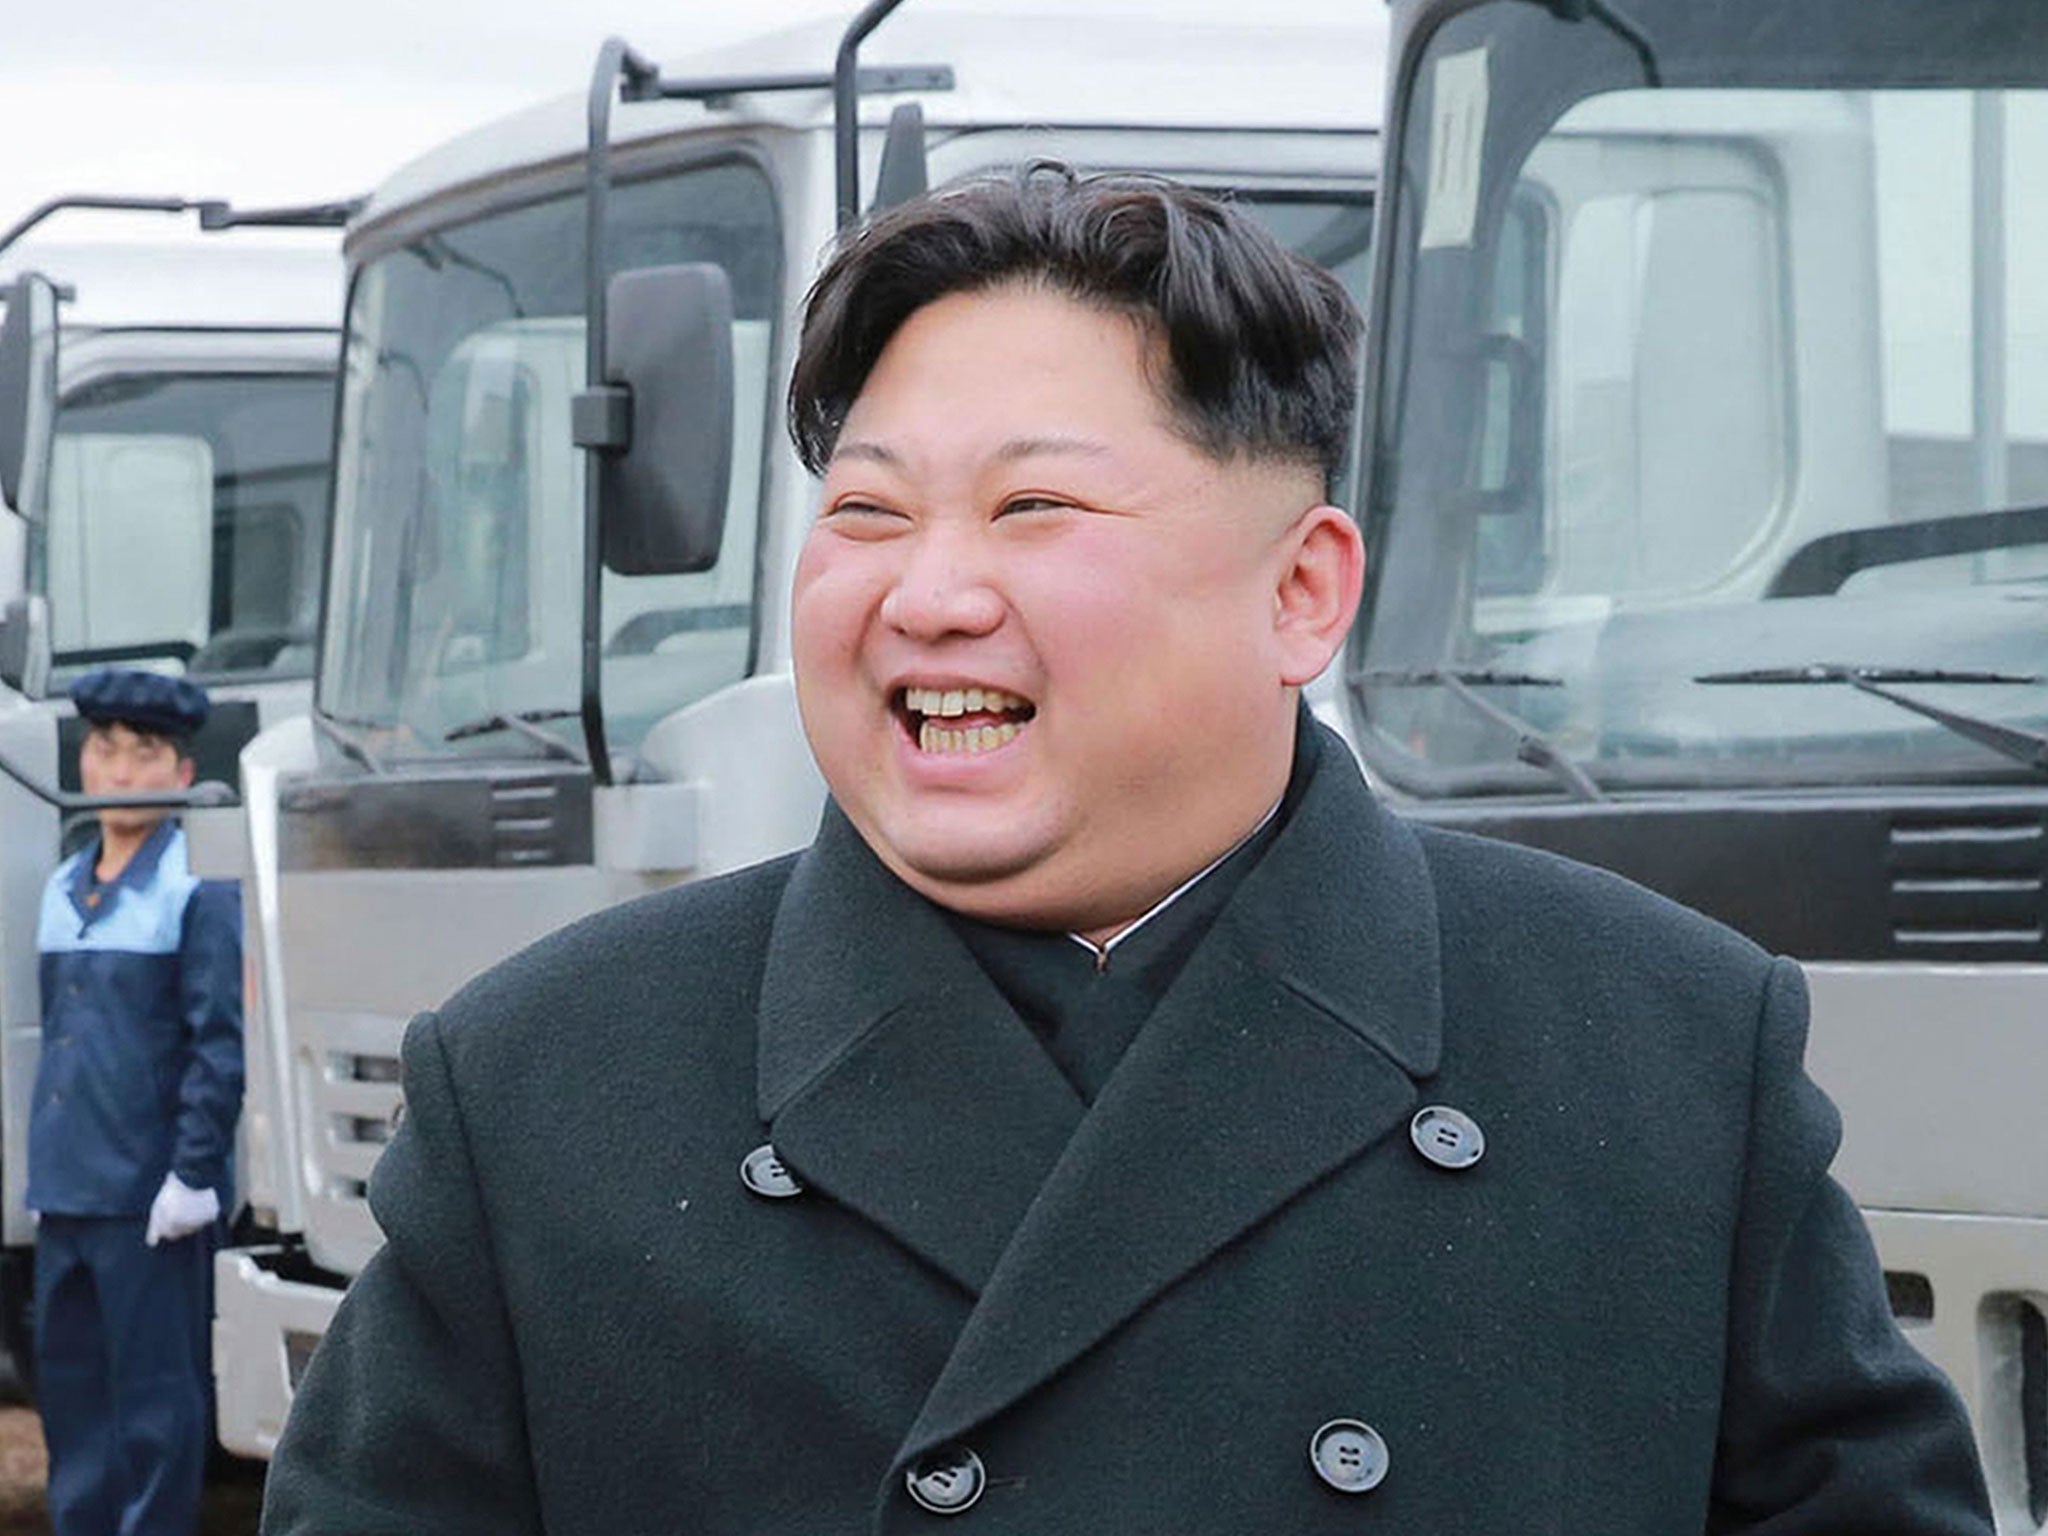 North Korea said the new label and sanctions were a 'violent infringement'